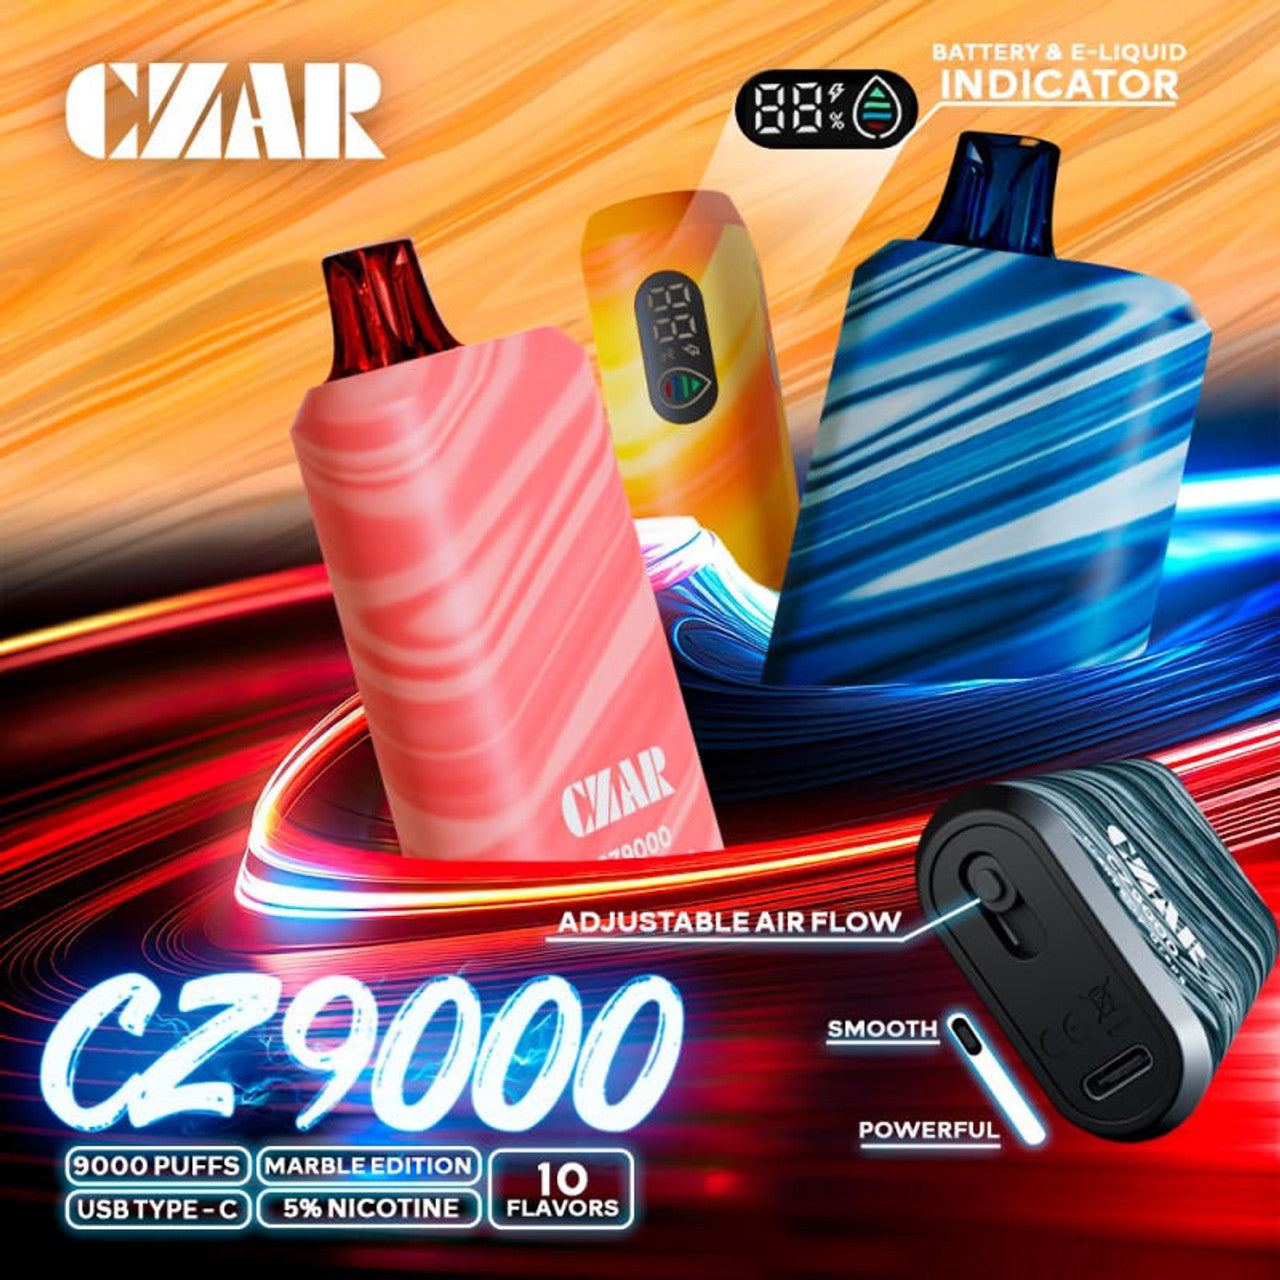 Czar CZ9000